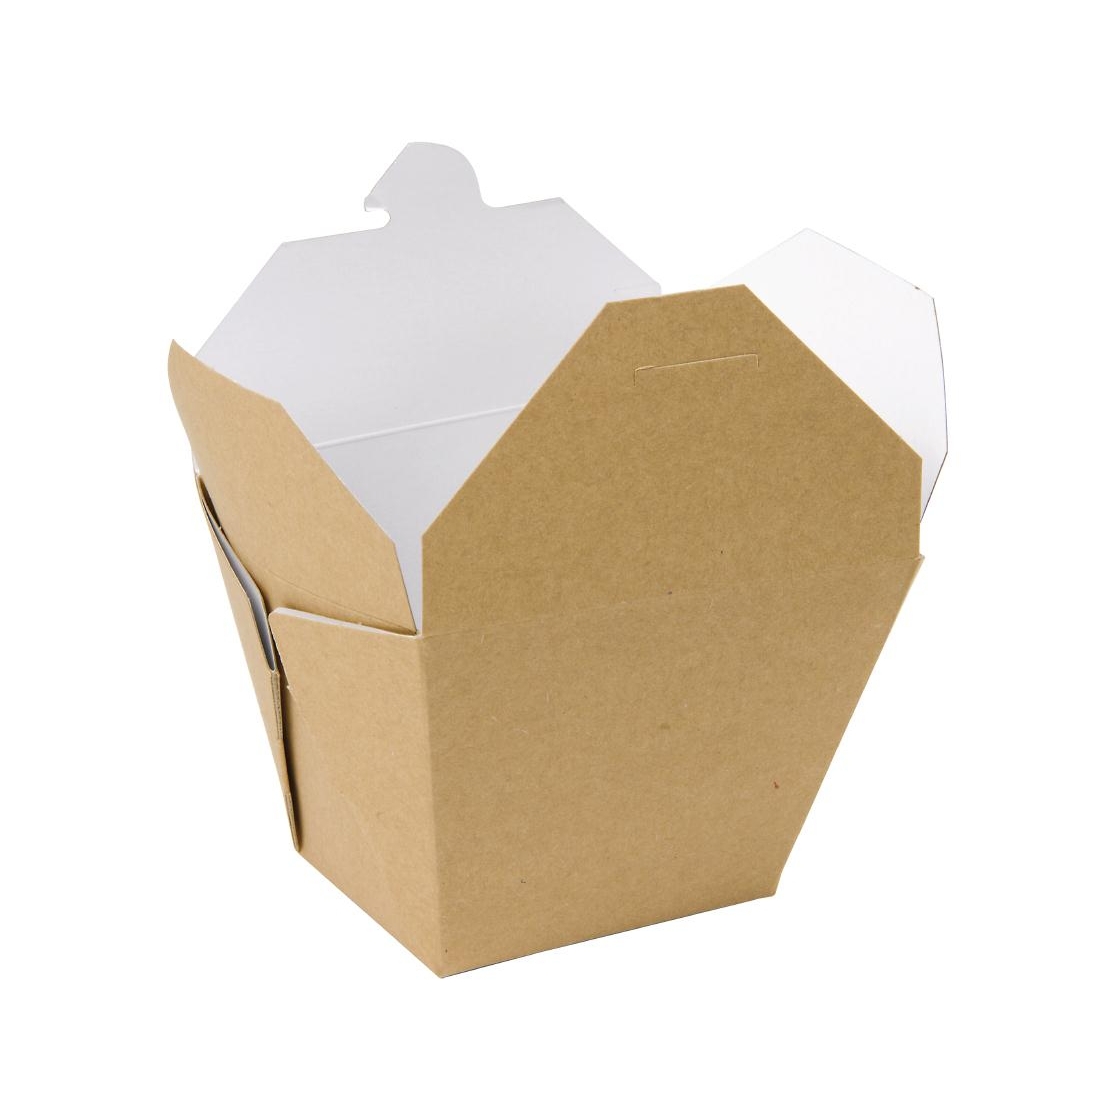 dm172_food-carton-square-open